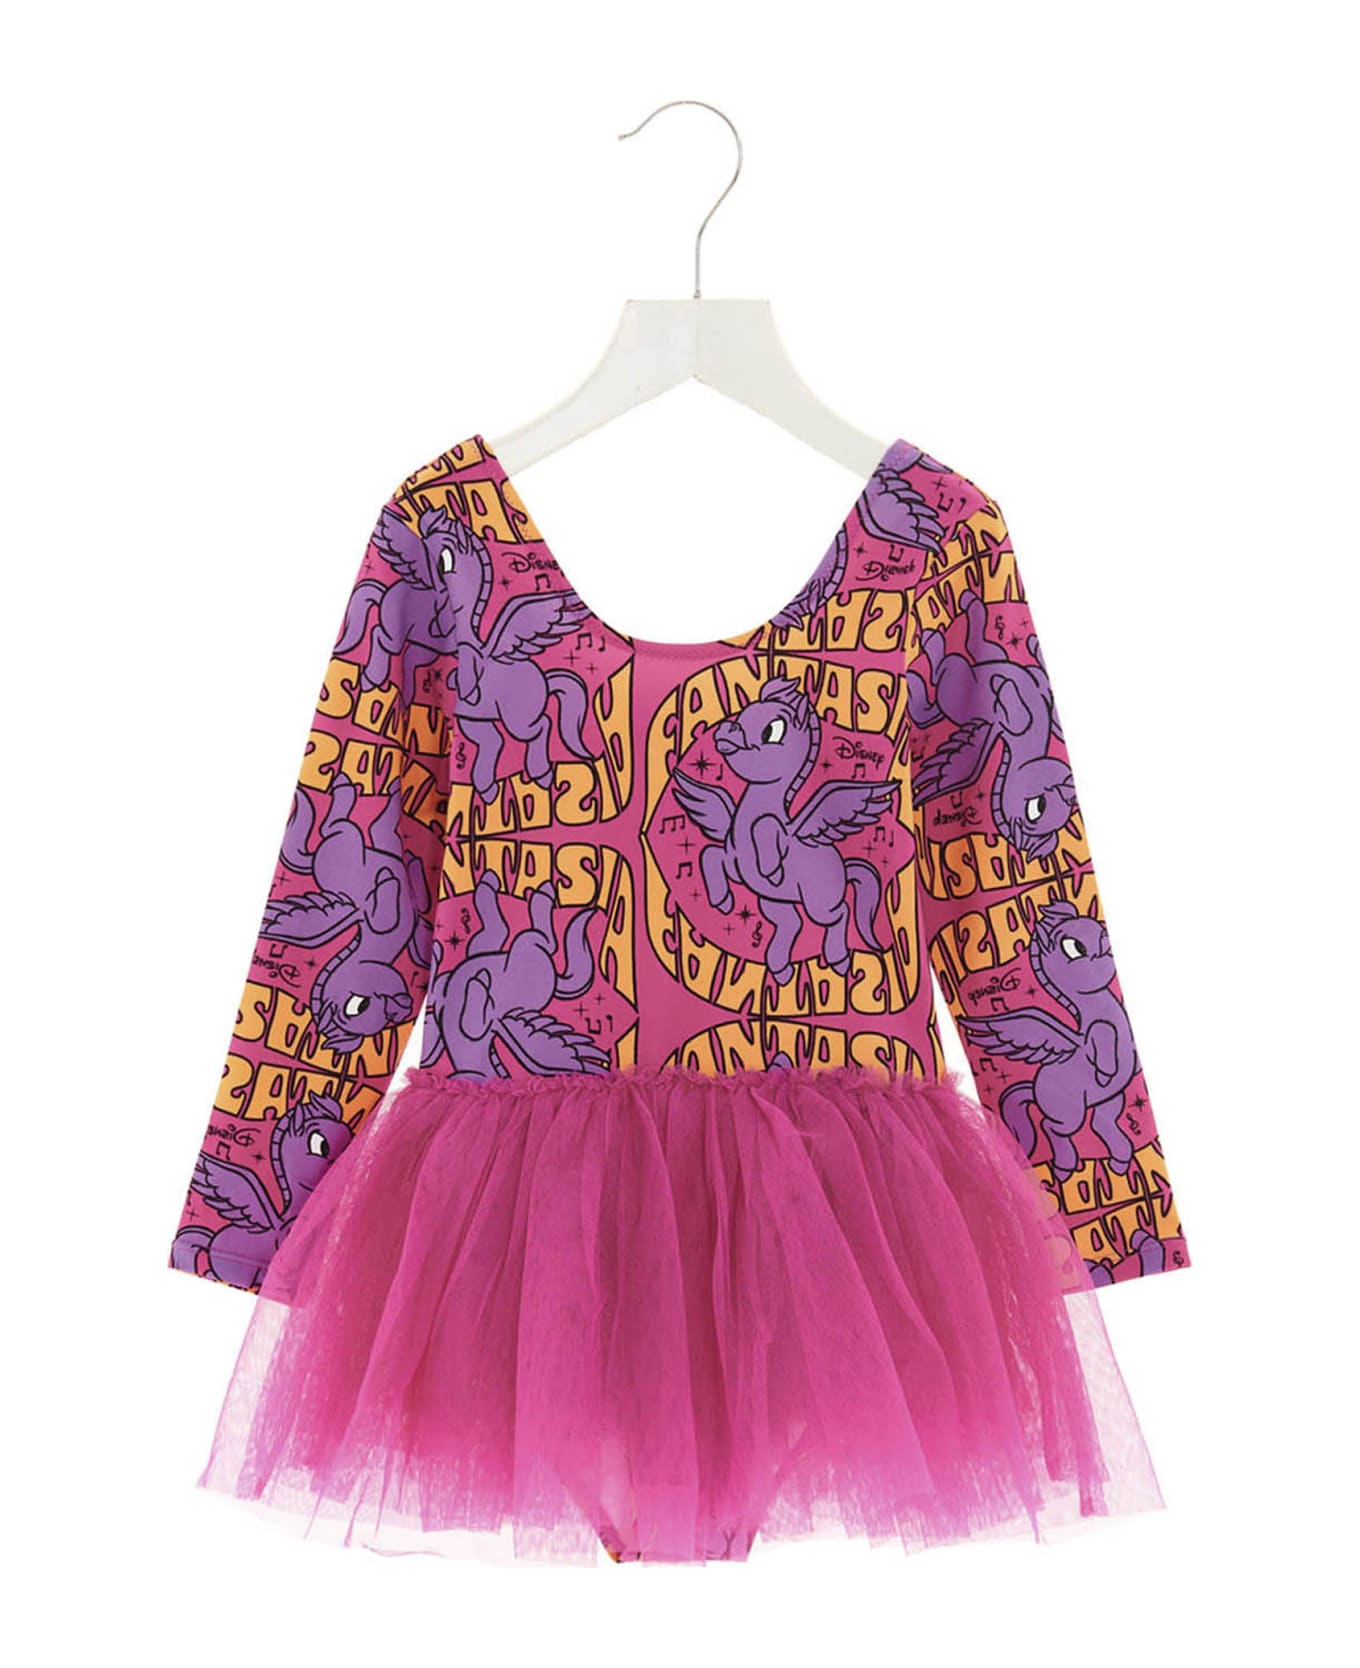 Stella McCartney Kids X Disney Fantasia Dress - Purple